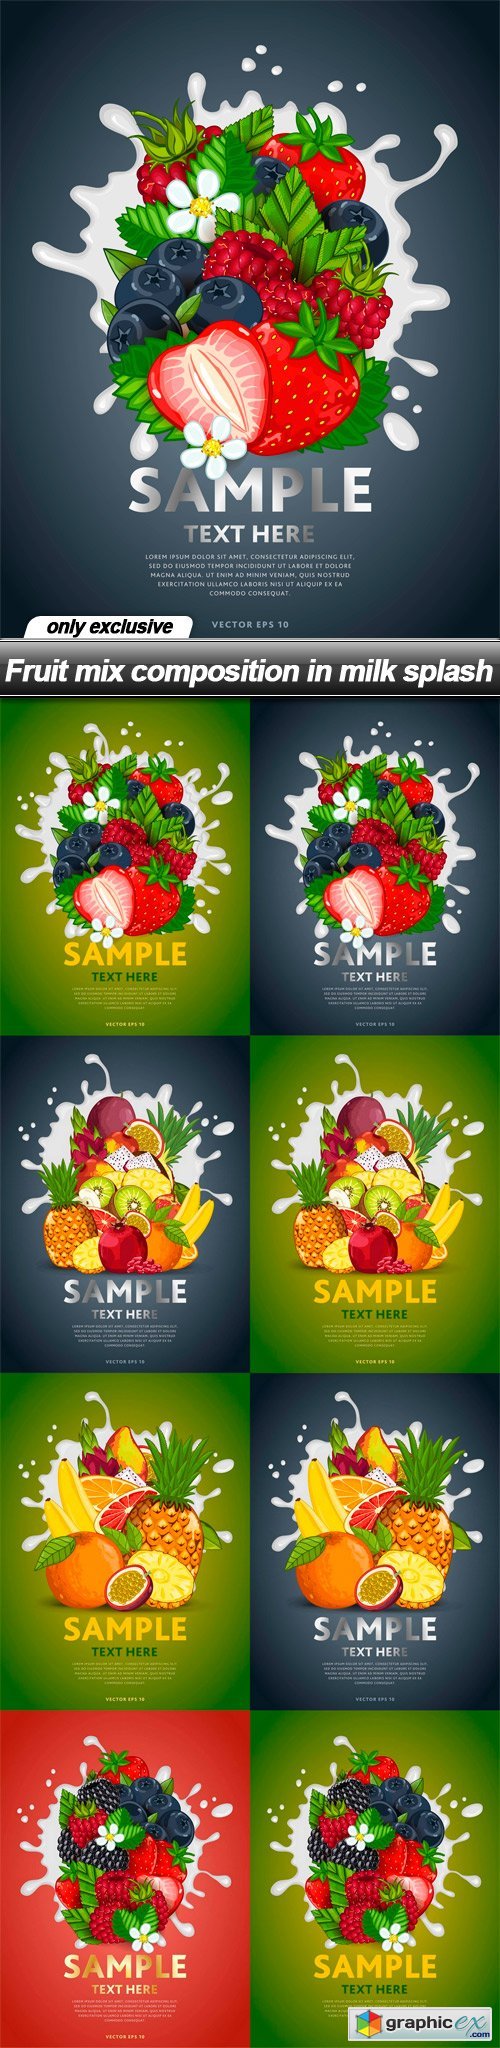 Fruit mix composition in milk splash - 8 EPS